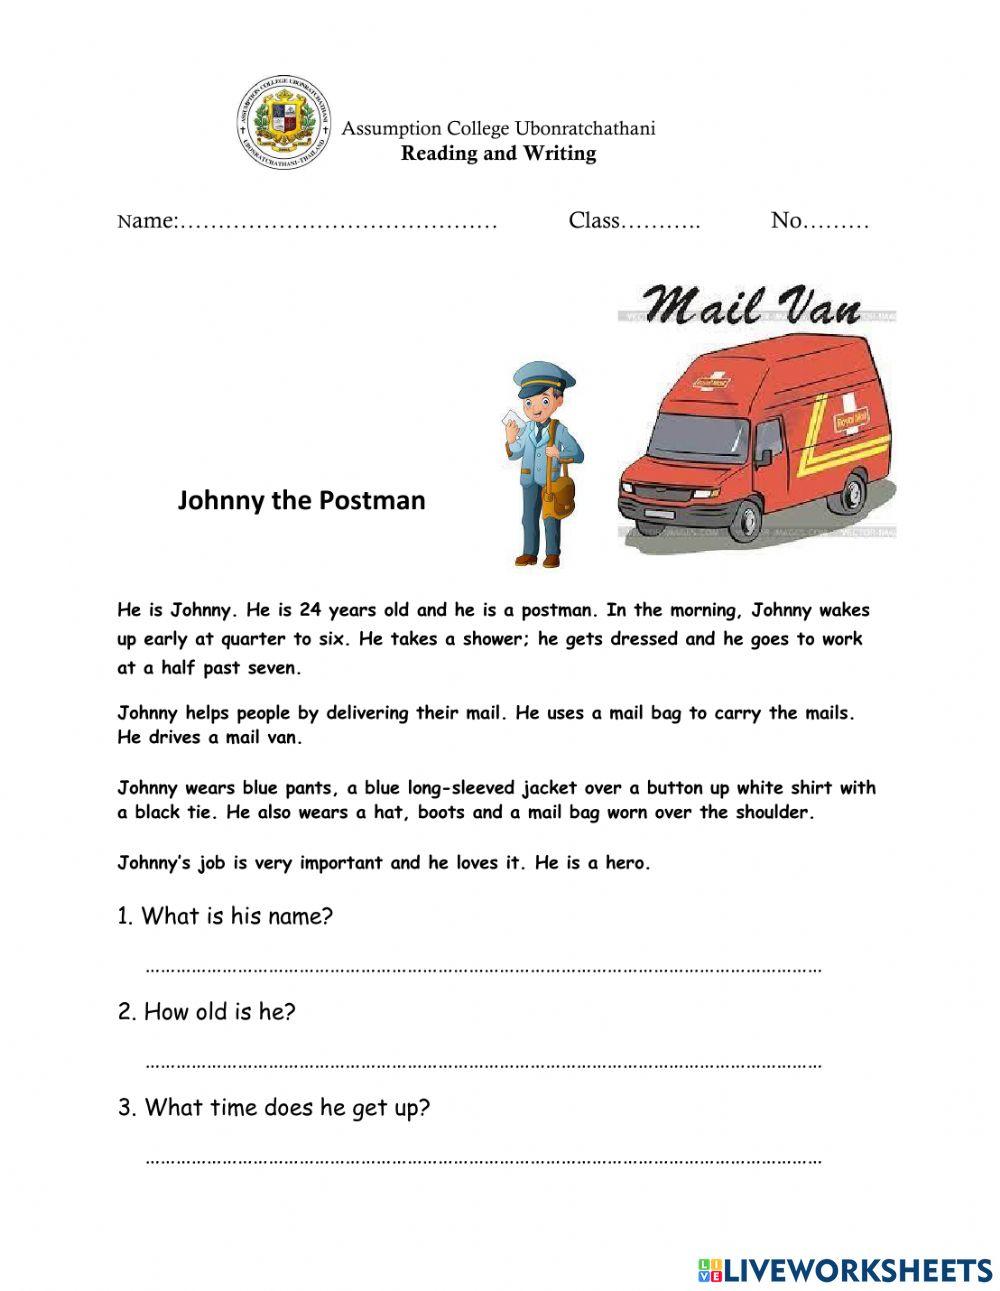 Johnny the Postman